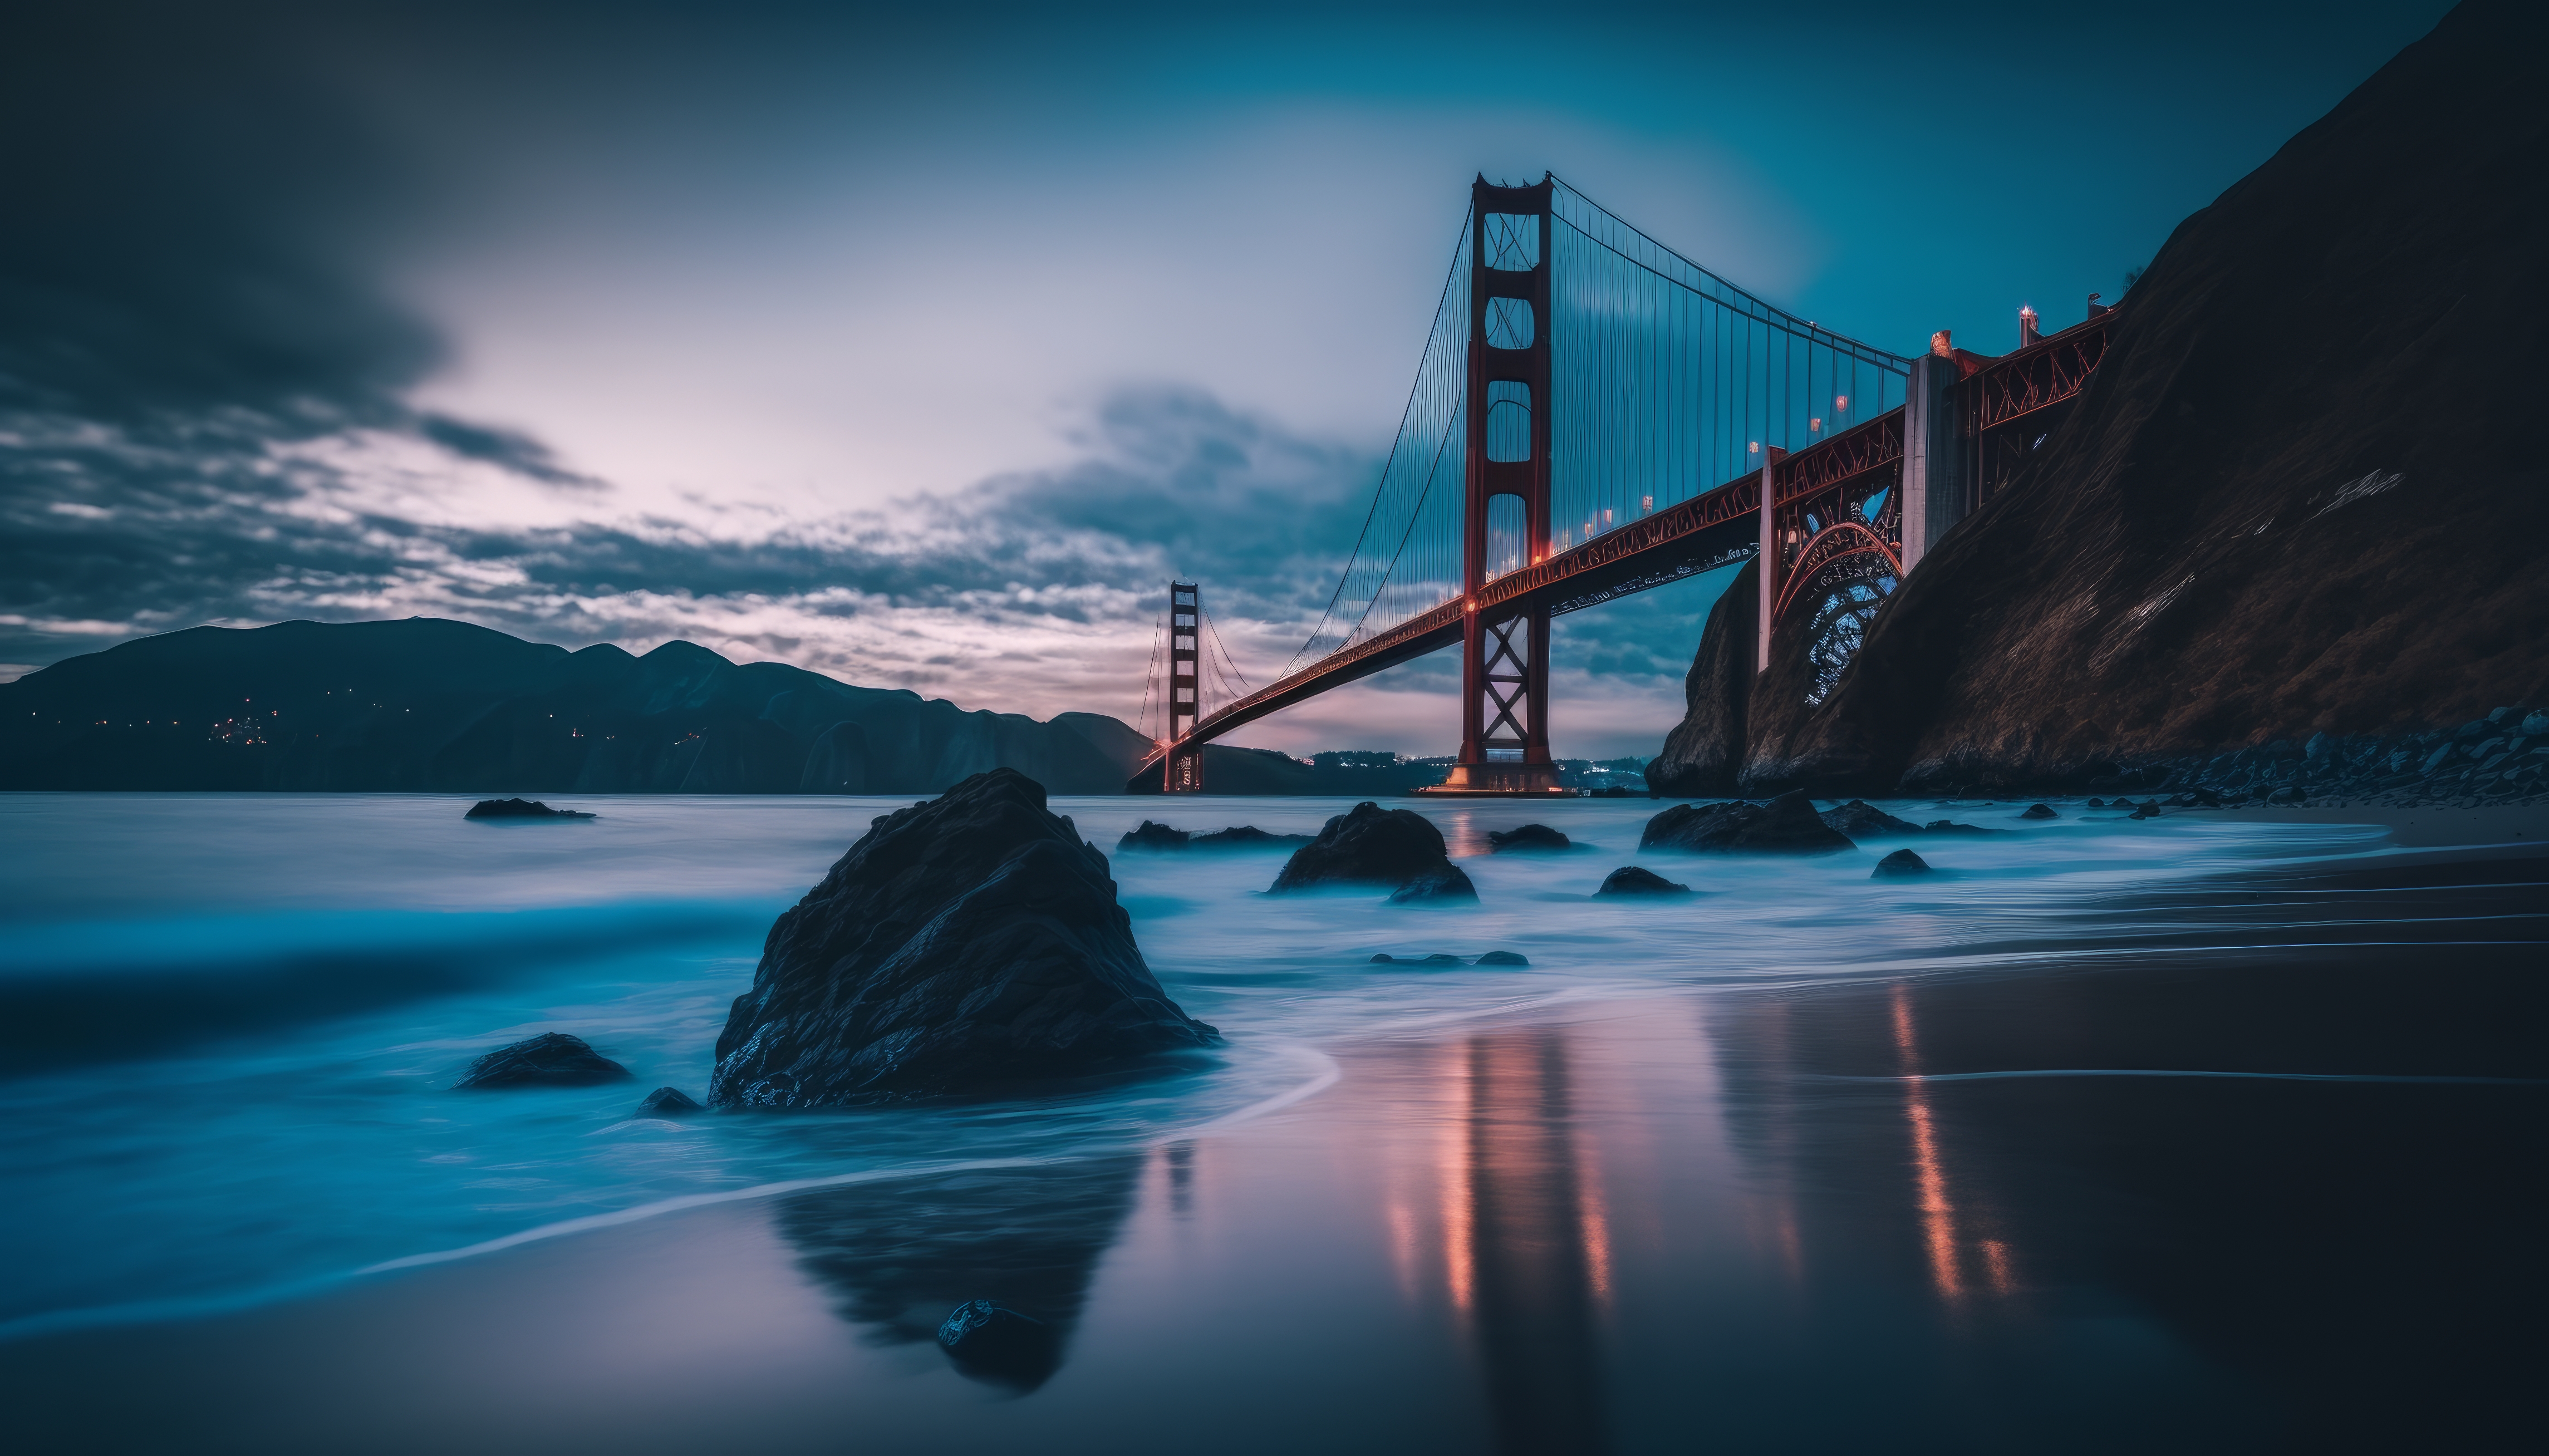 Ai Art Golden Gate Bridge Blue Hour Bridge Water Rocks Reflection Sky Clouds Waves 4579x2616